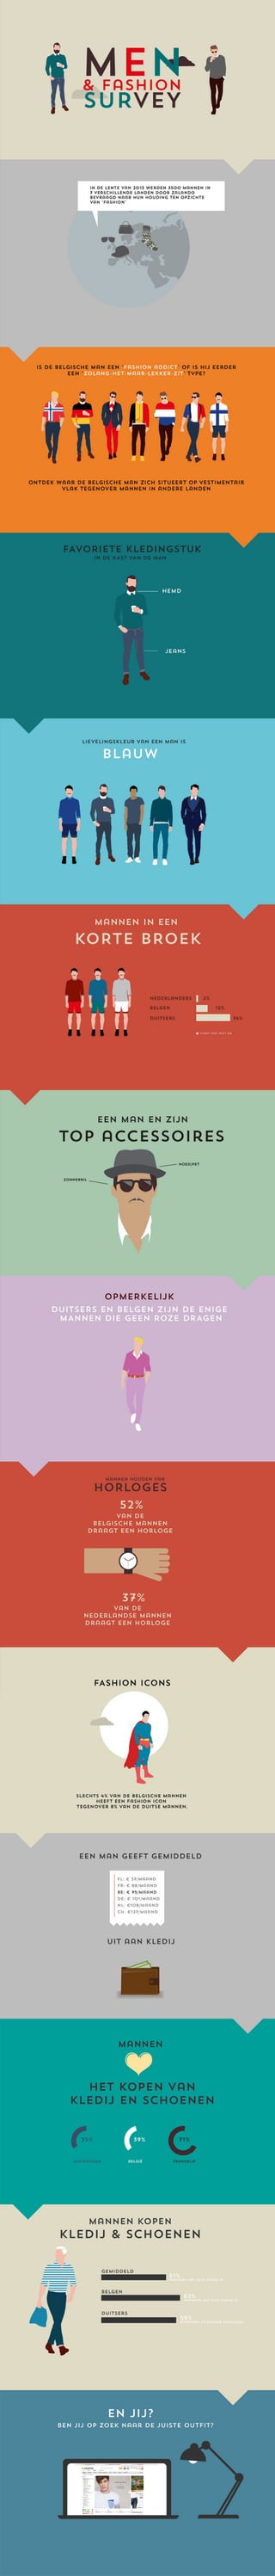 Infographic voor Zalando over mannen en mode (fashion survey)